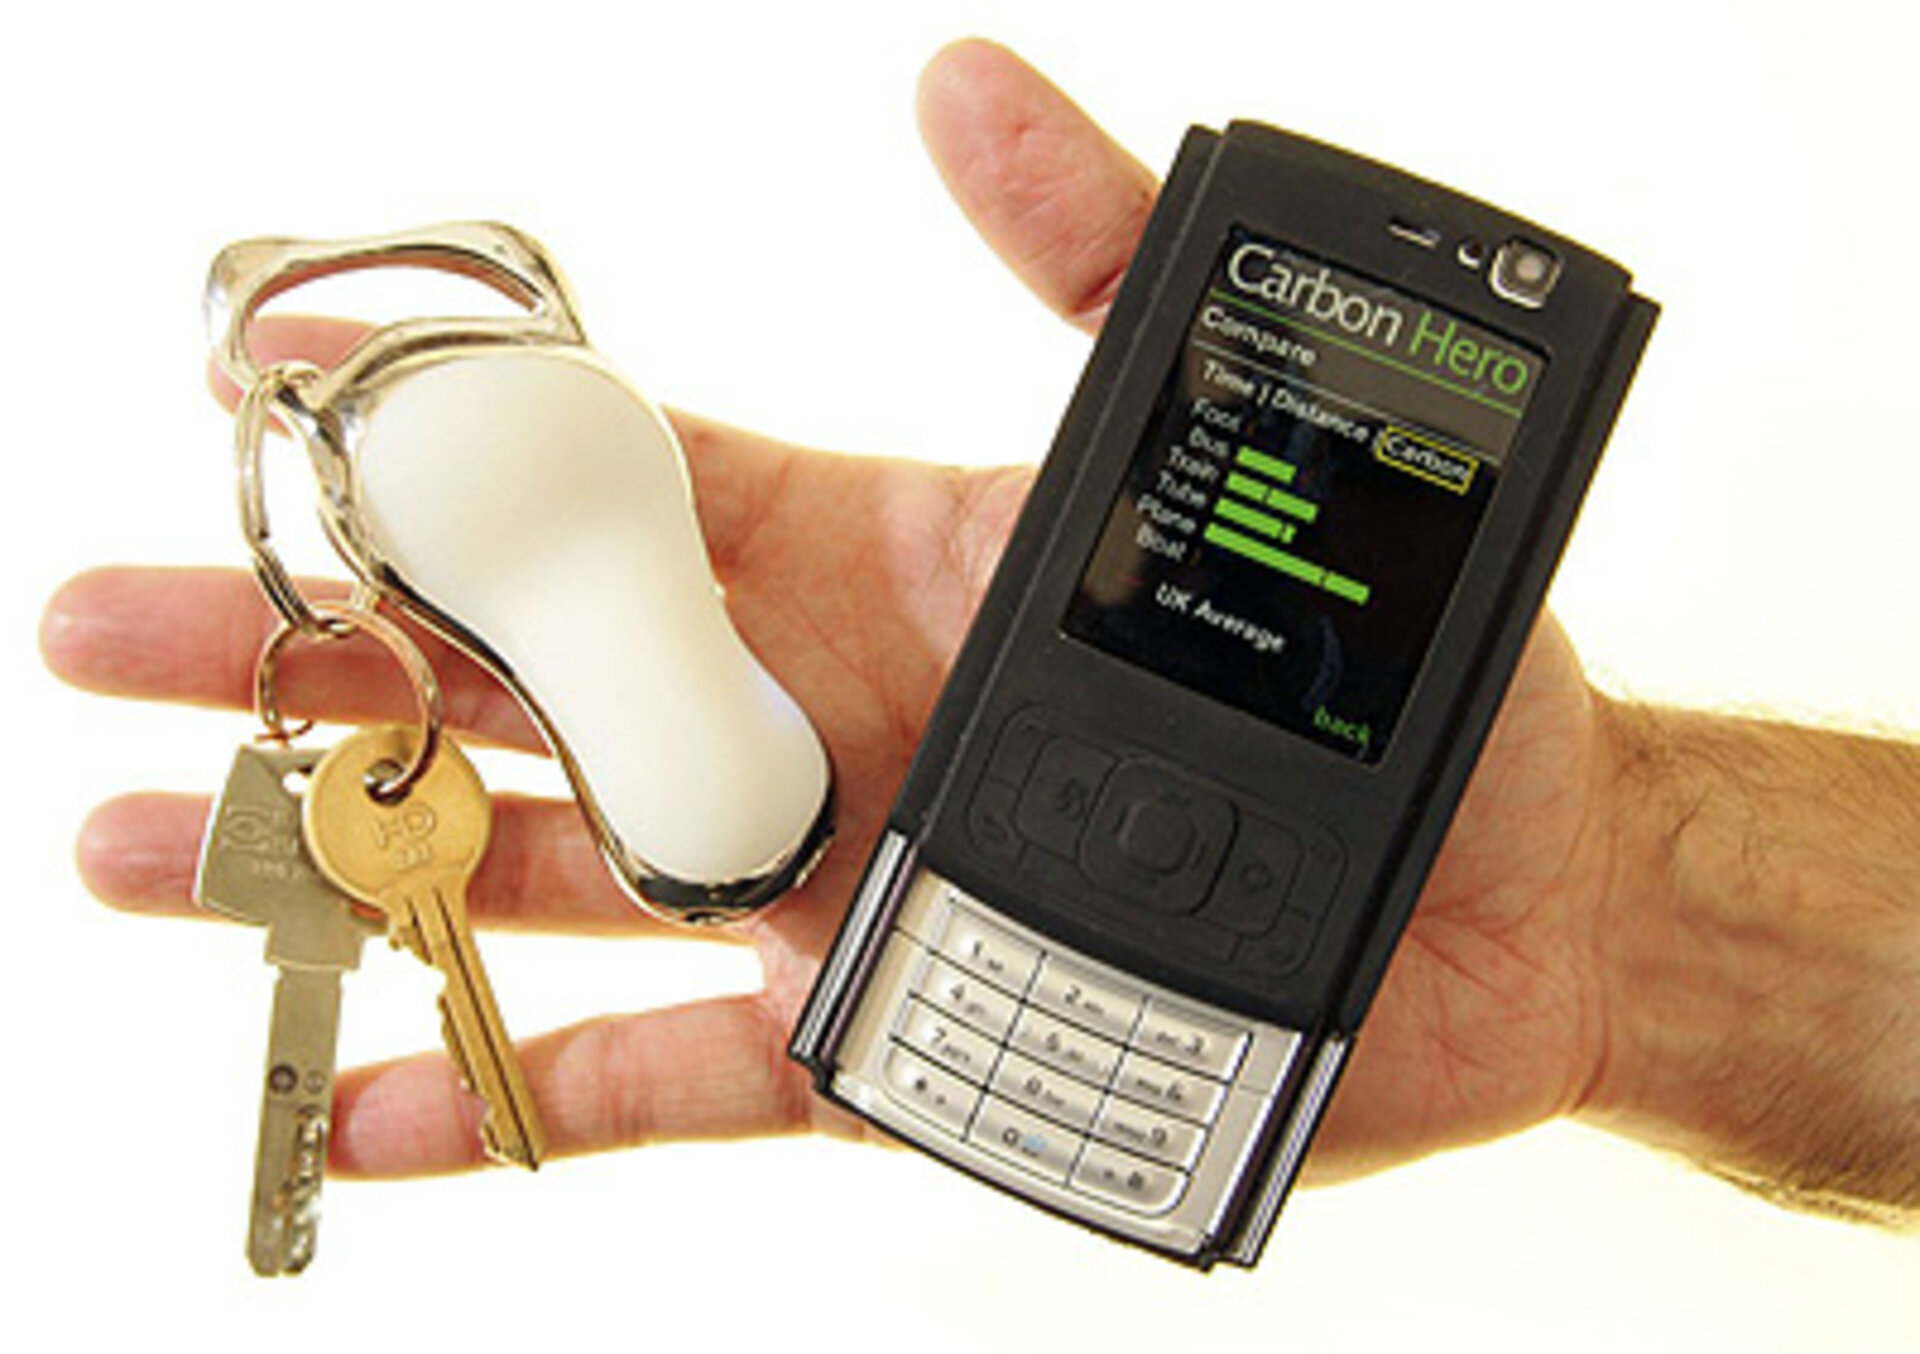 CarbonDiem, a key ring sensor displays the carbon footprint on a mobile phone